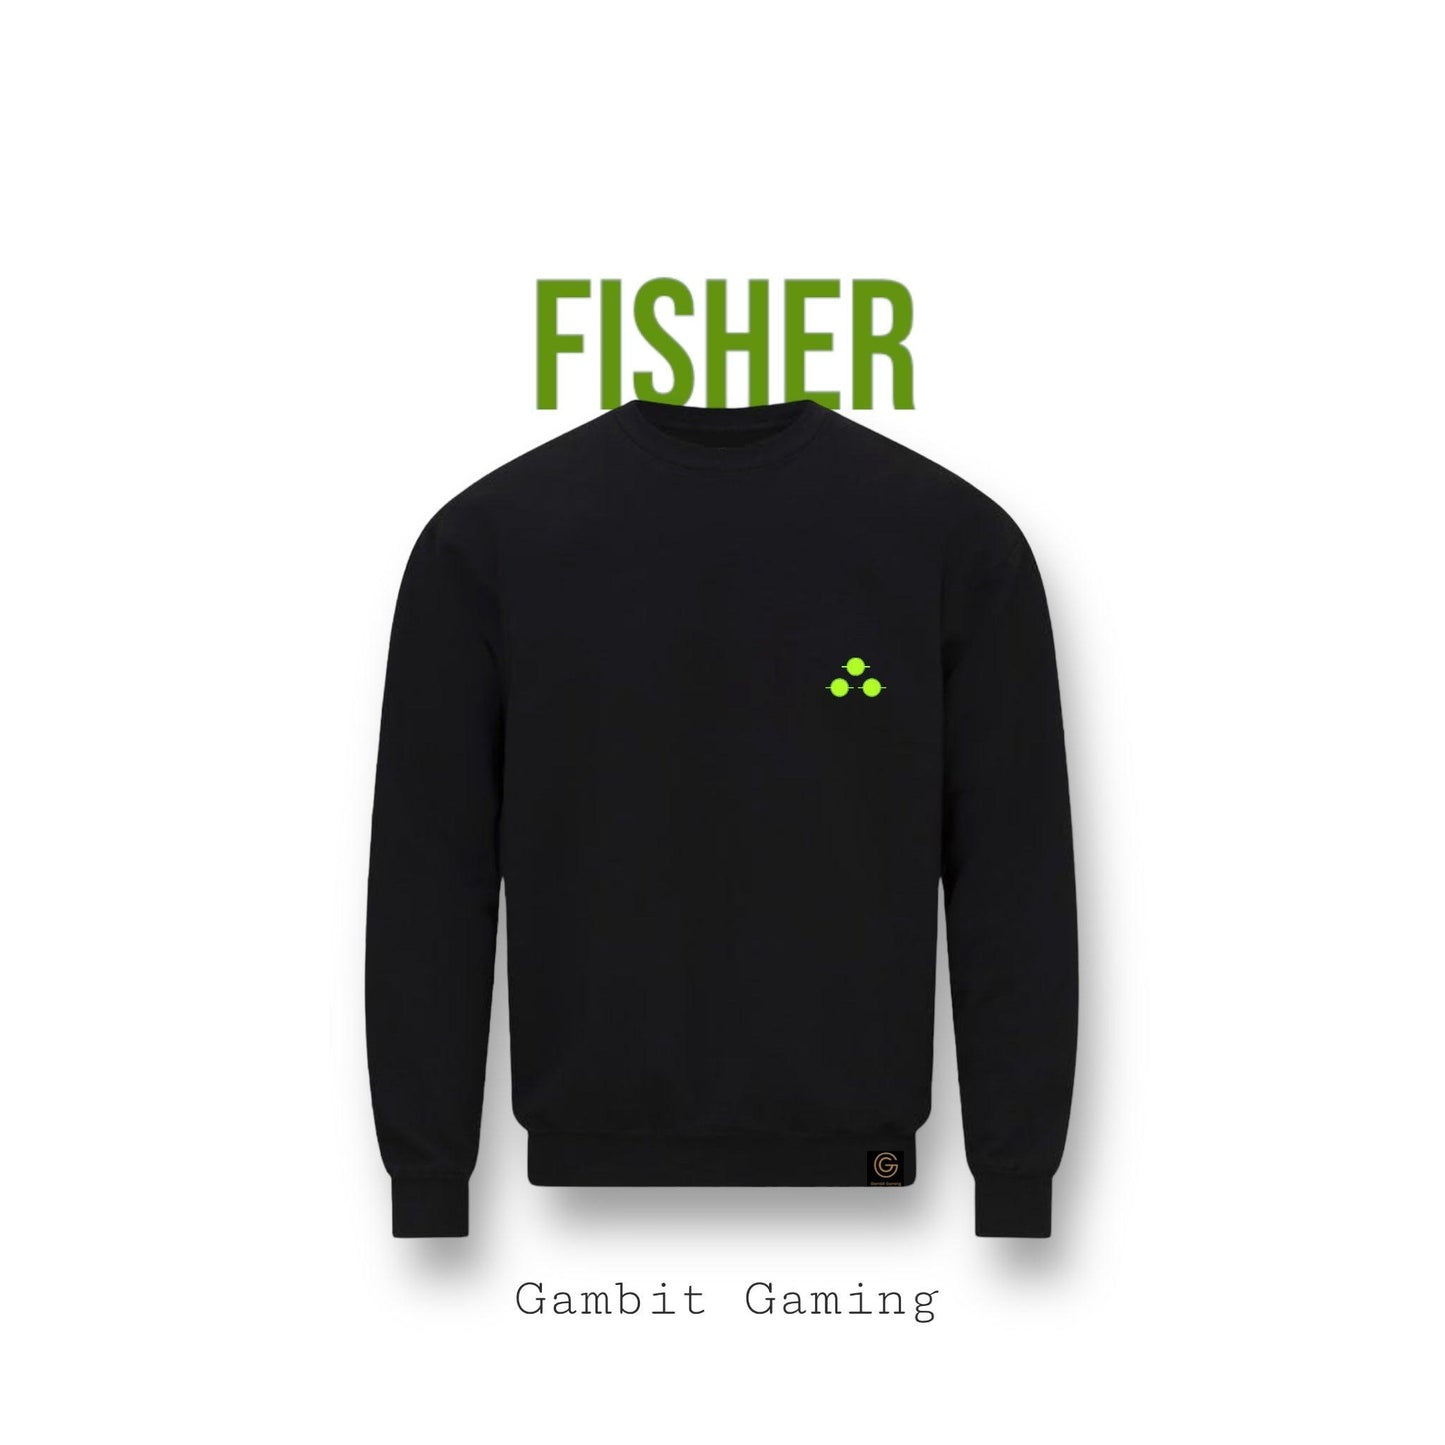 Fisher Sweater - Gambit Gaming